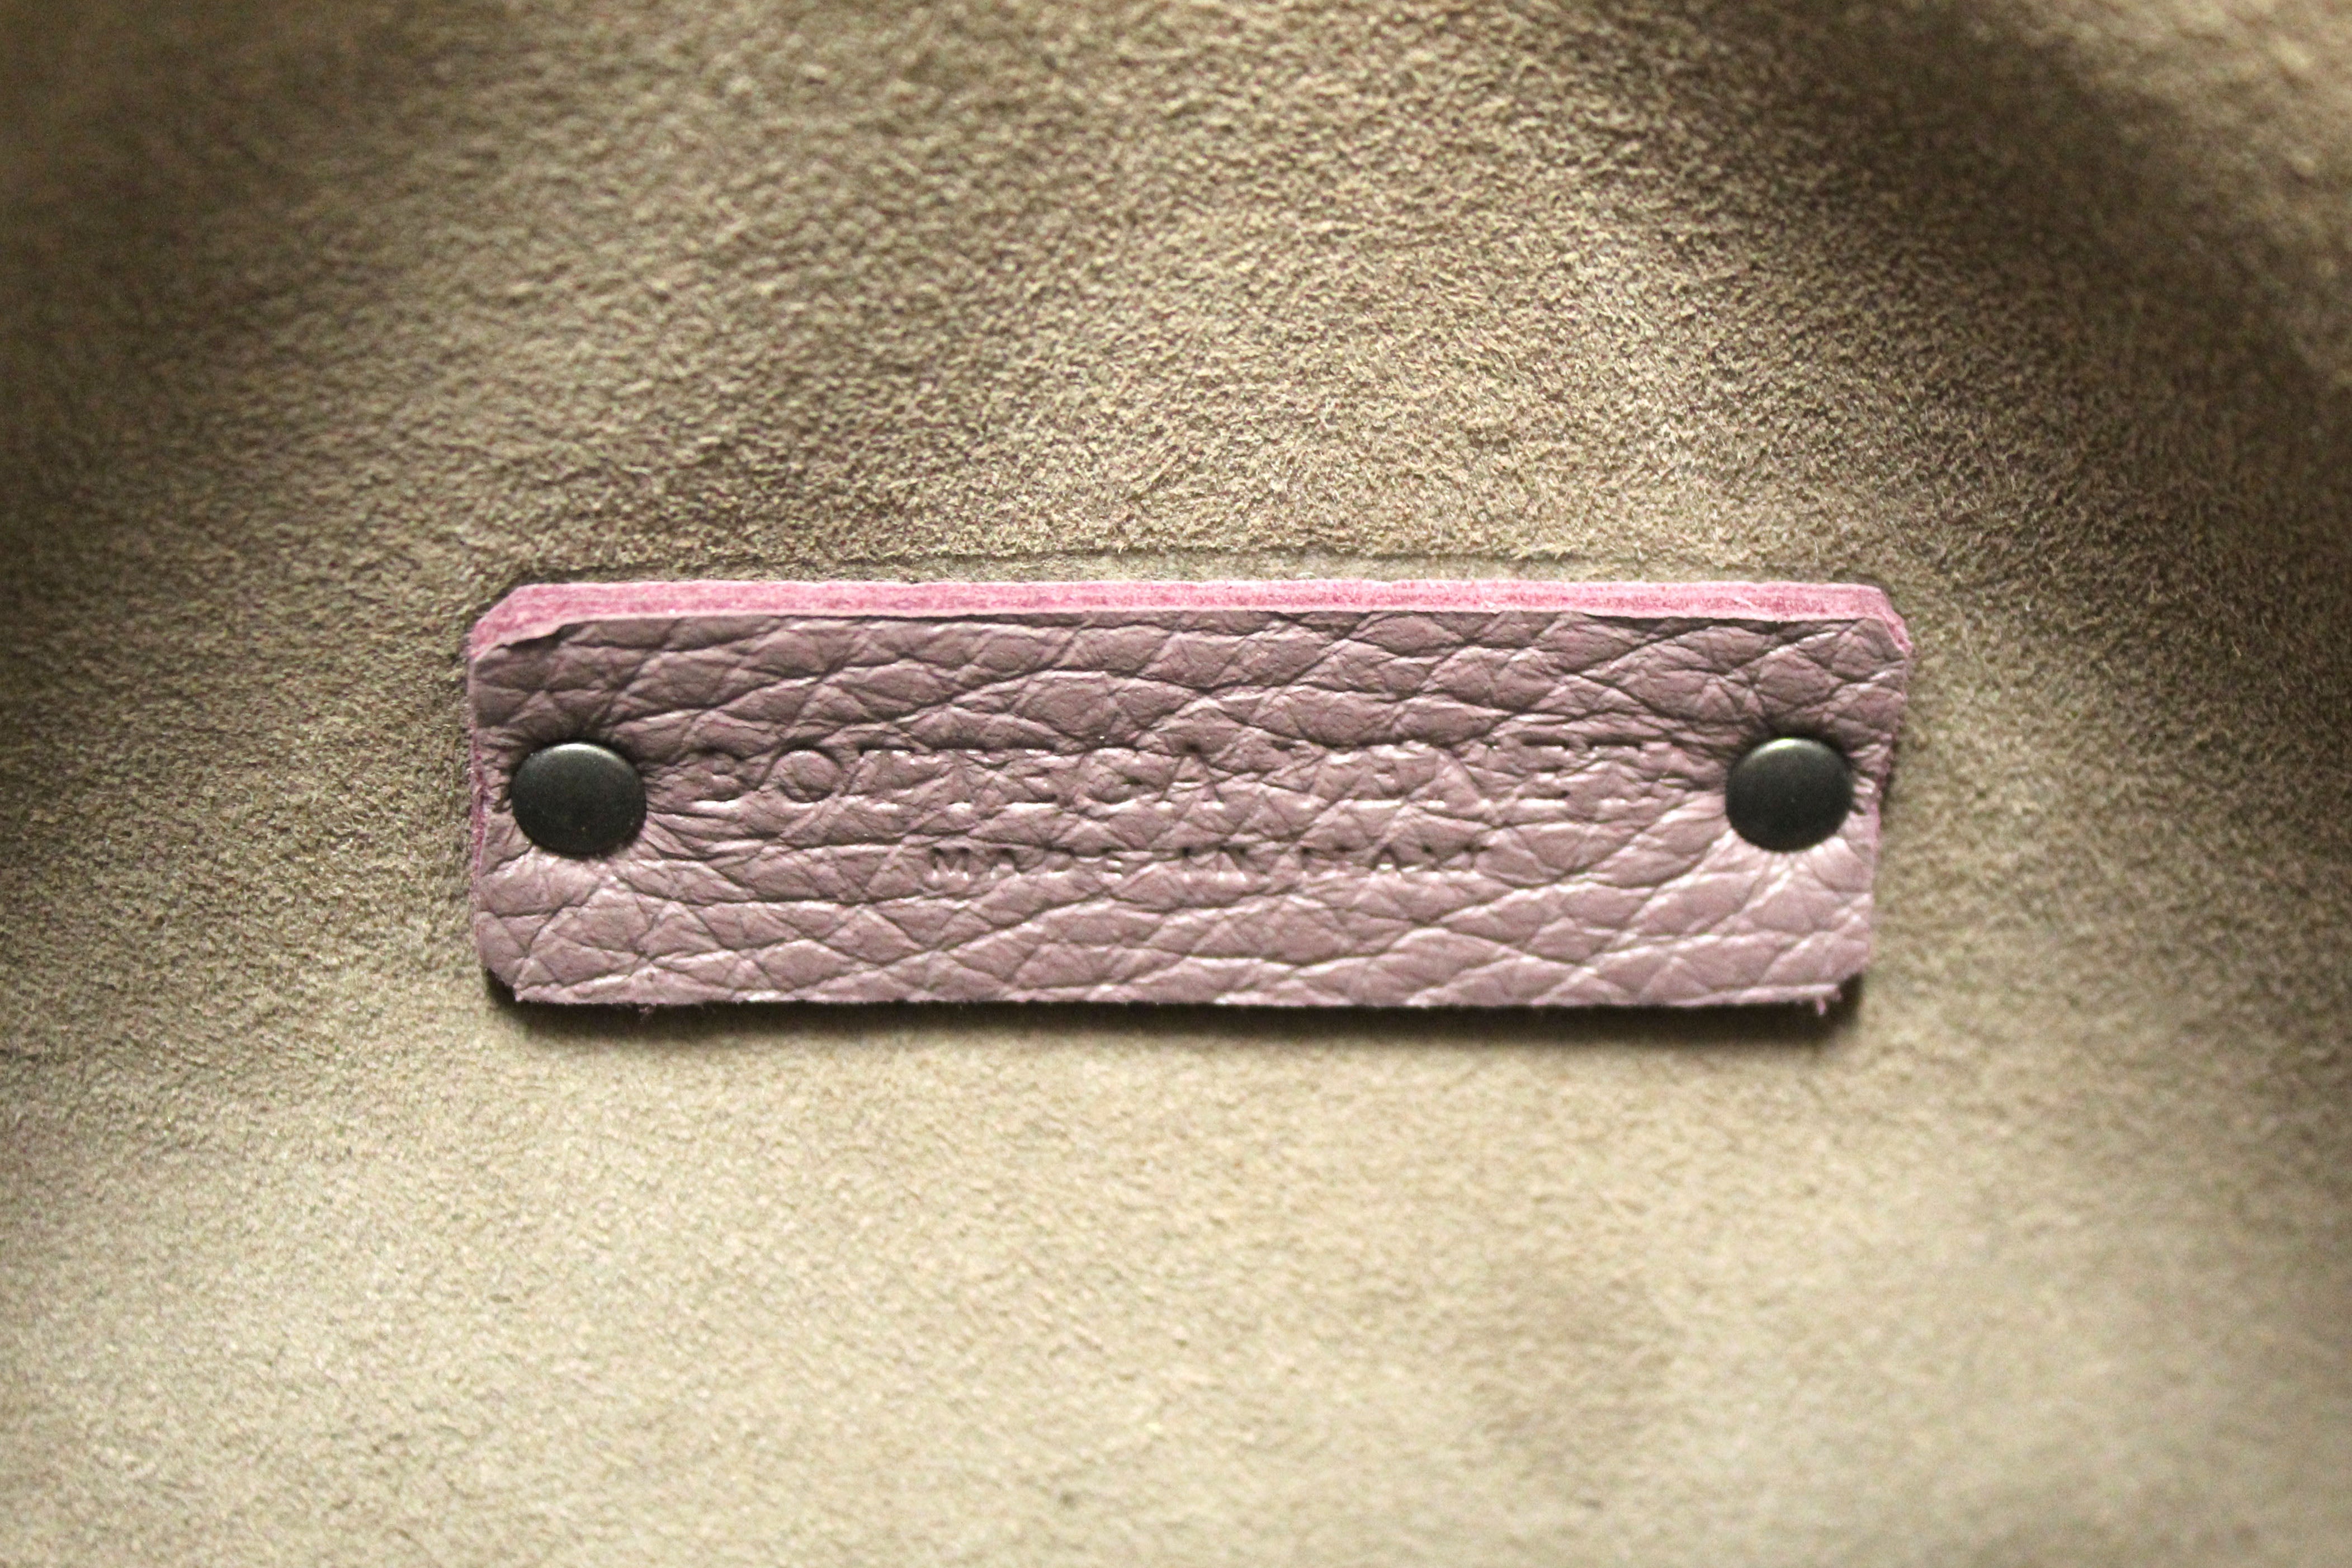 Authentic Bottega Veneta Purple Leather Small Hobo Shoulder Bag